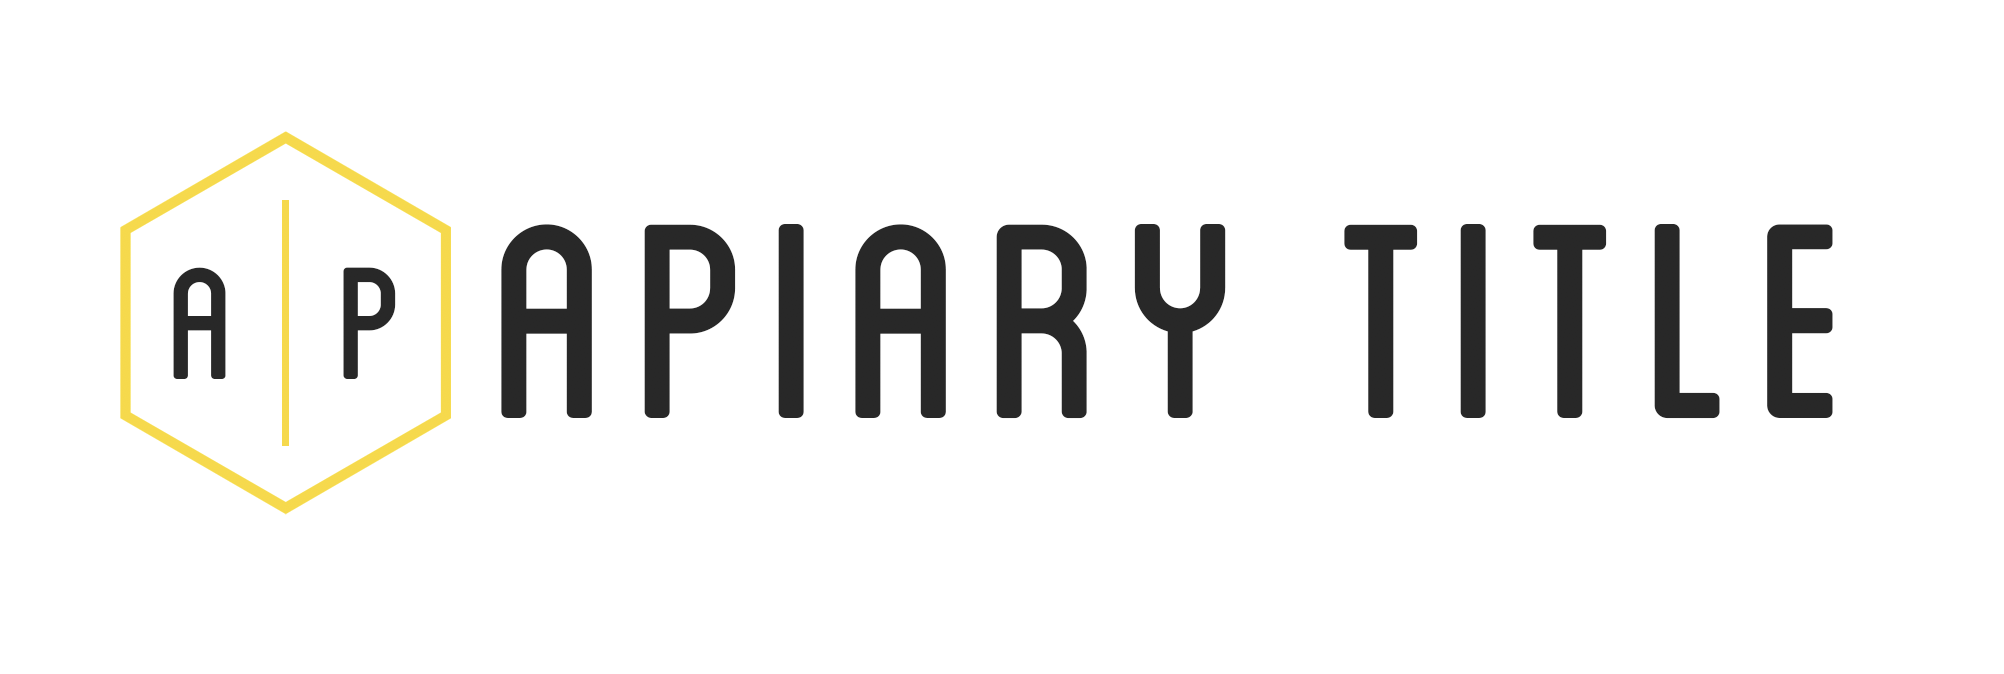 Apiary Title logo